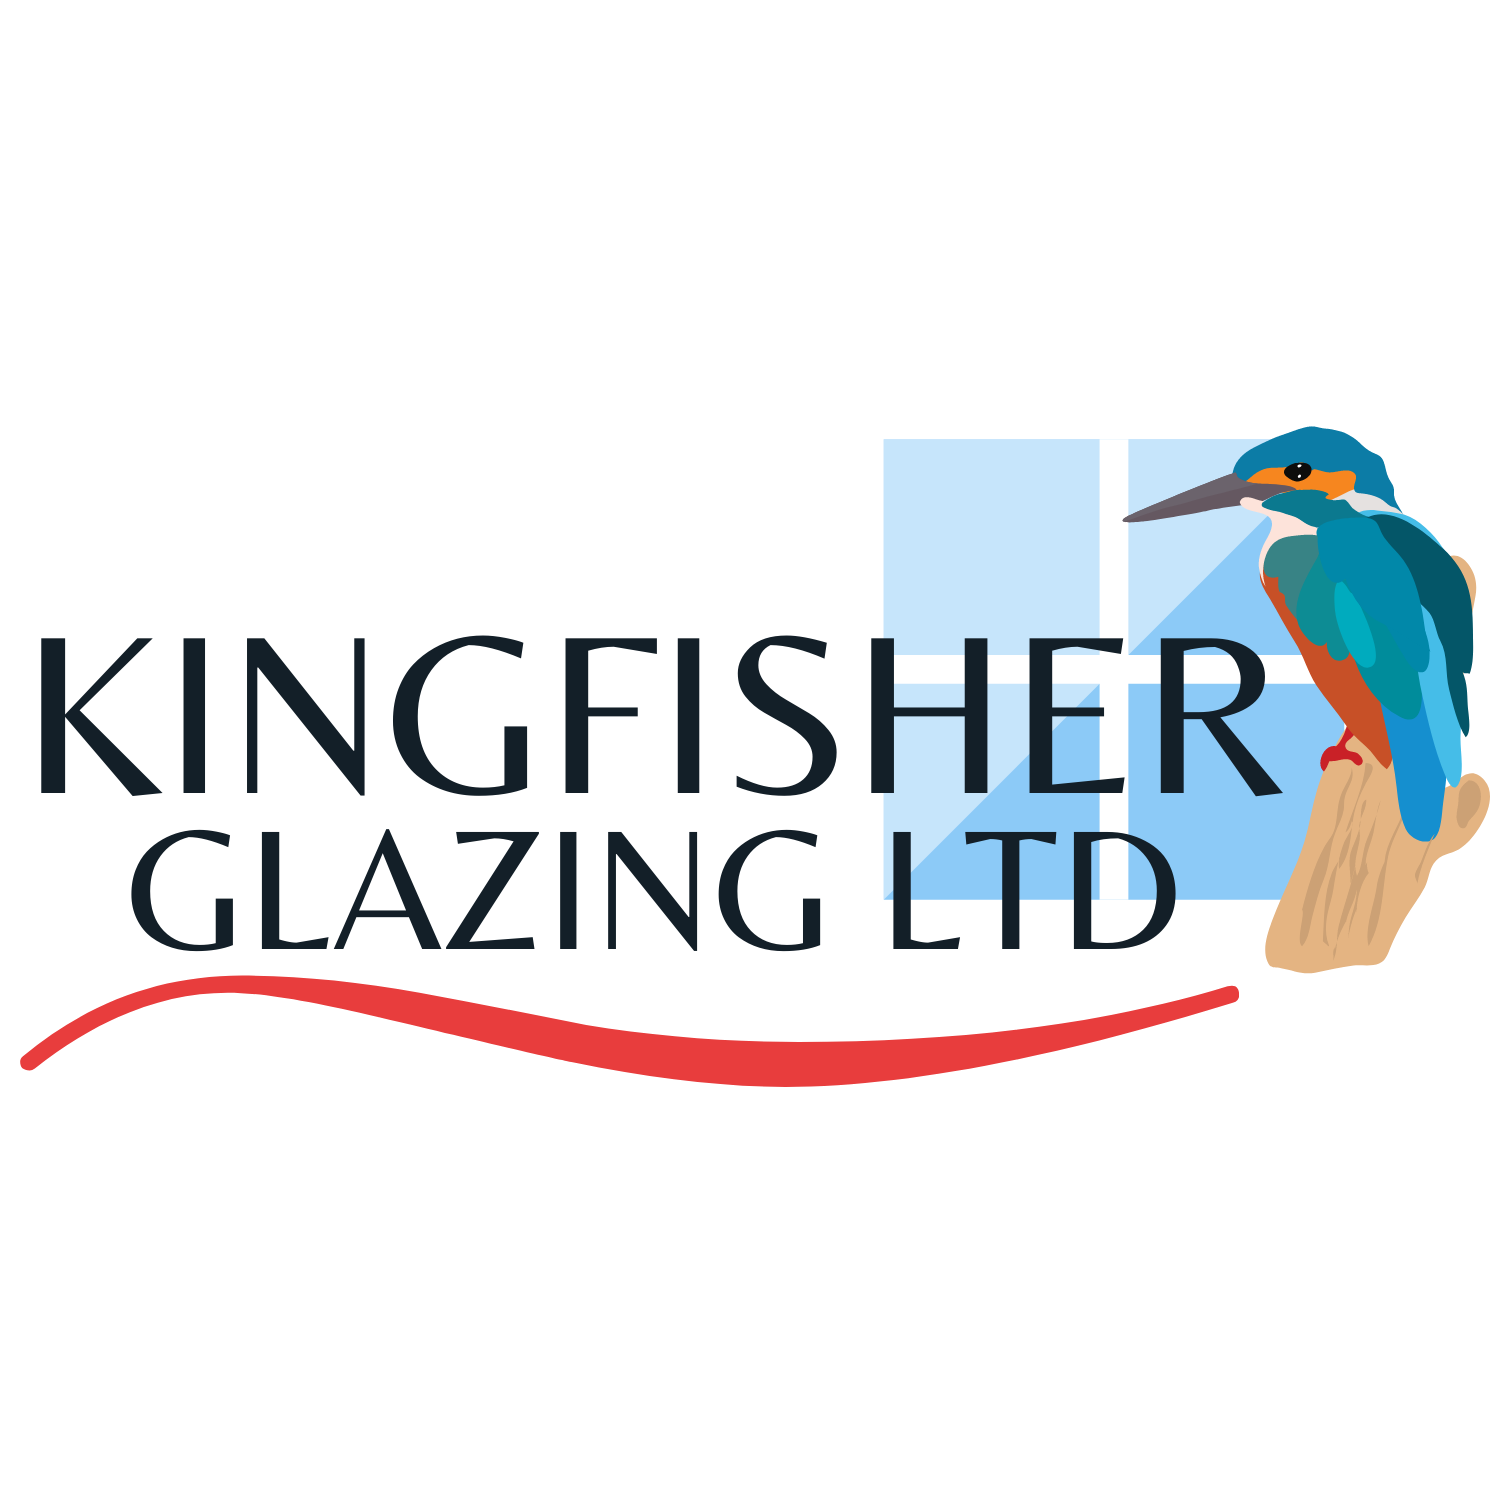 Kingfisher Glazing